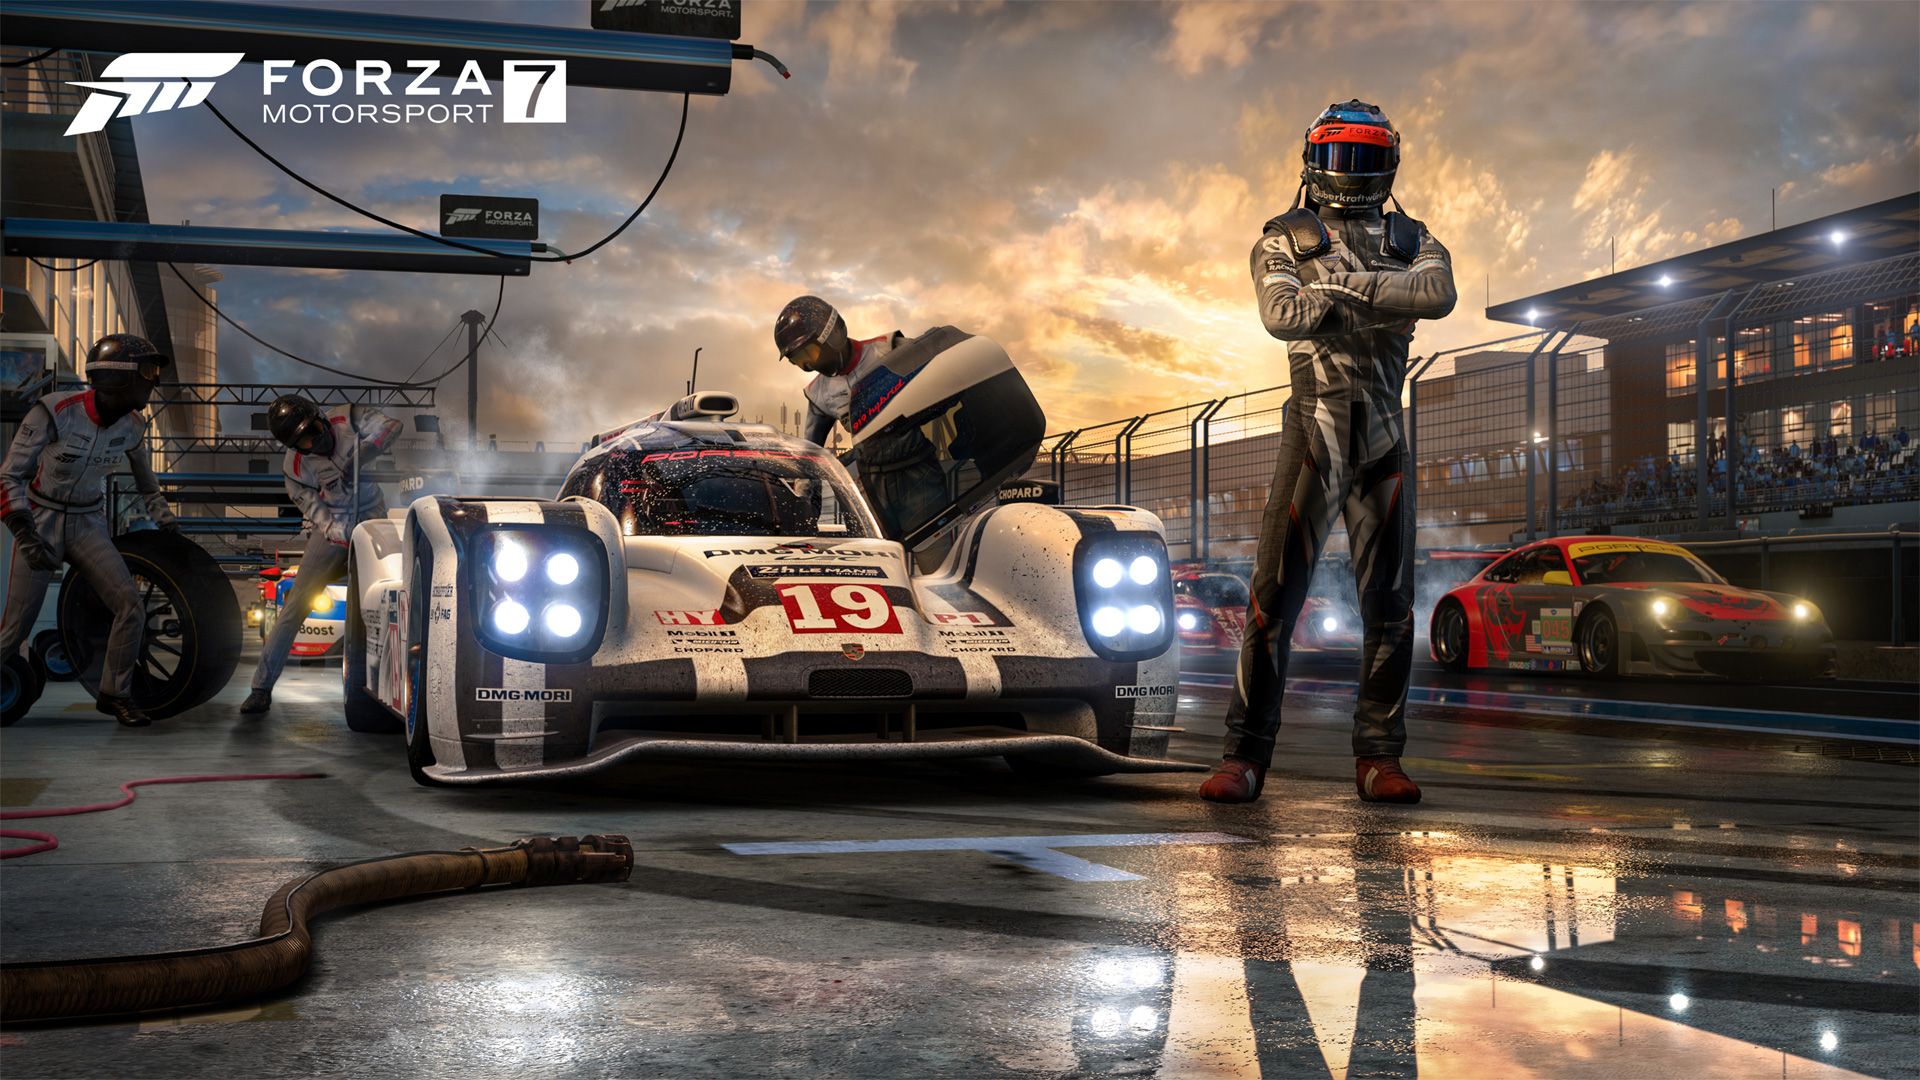 Wallpaper from Forza Motorsport 7